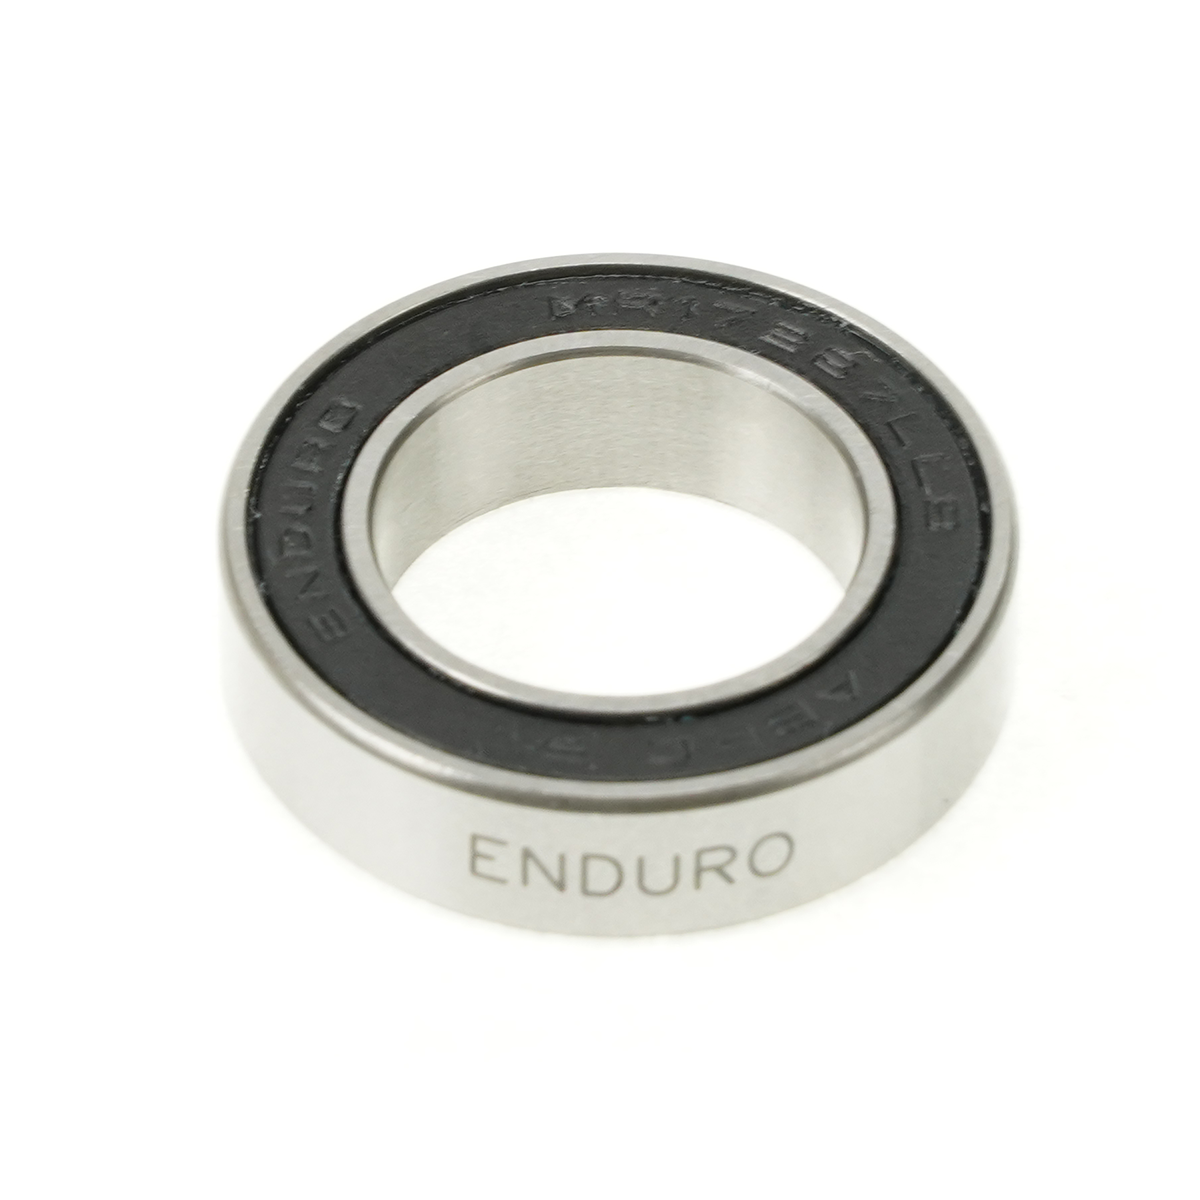 Enduro MR 17287 LLB A5 - ABEC-5, Radial Bearing (C3 Clearance) - 17mm x 28mm x 7mm